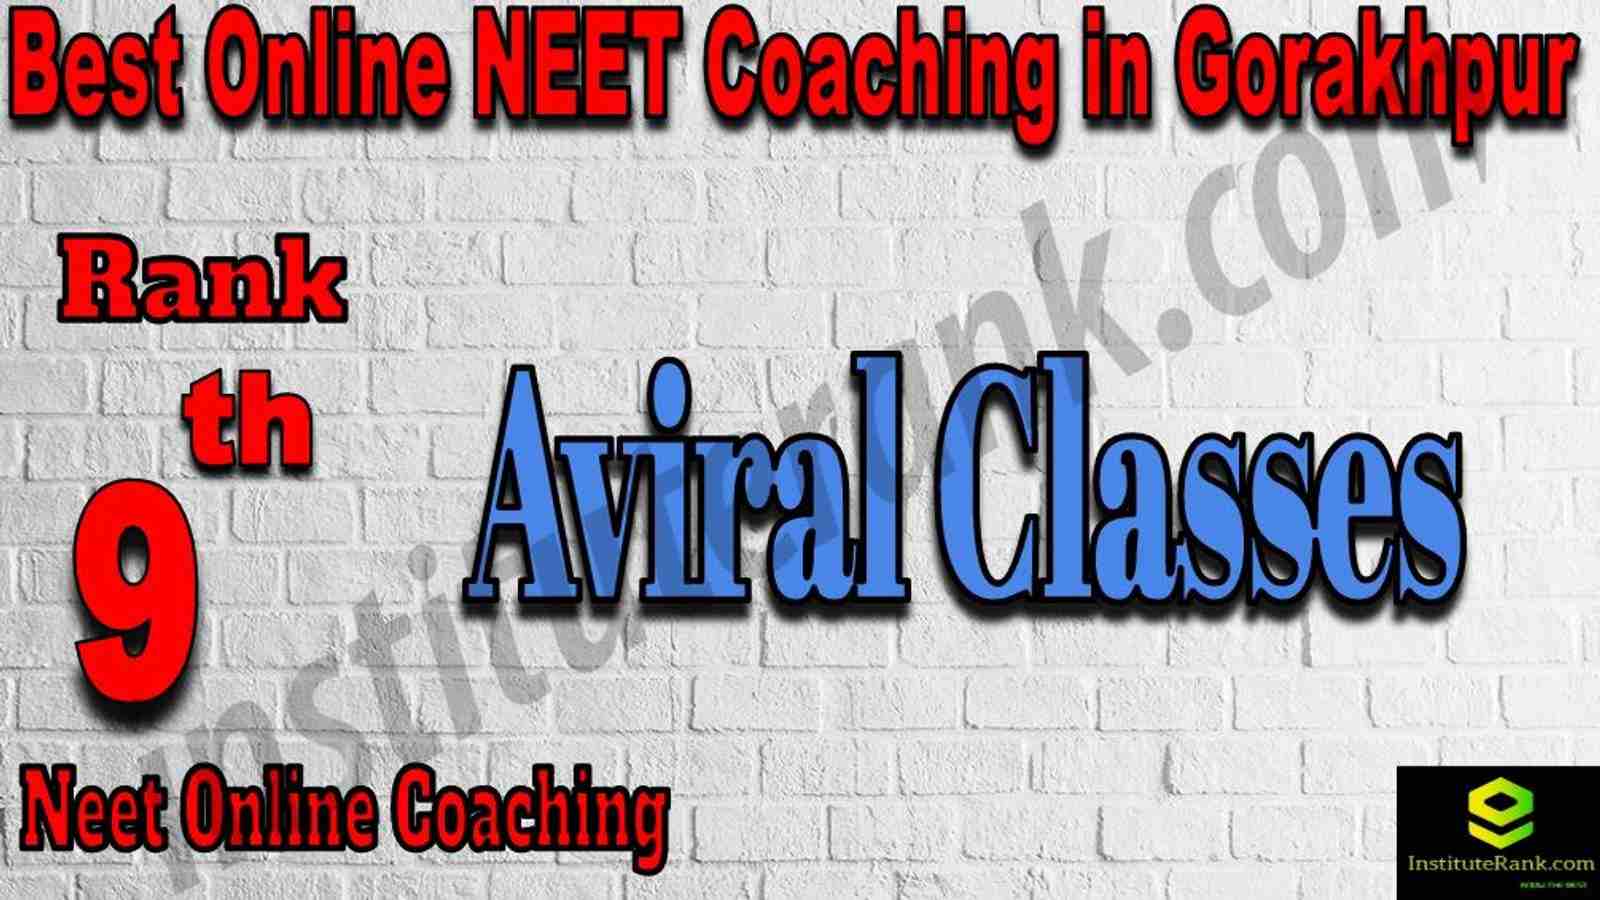 9th Best Online Neet Coaching in Gorakhpur